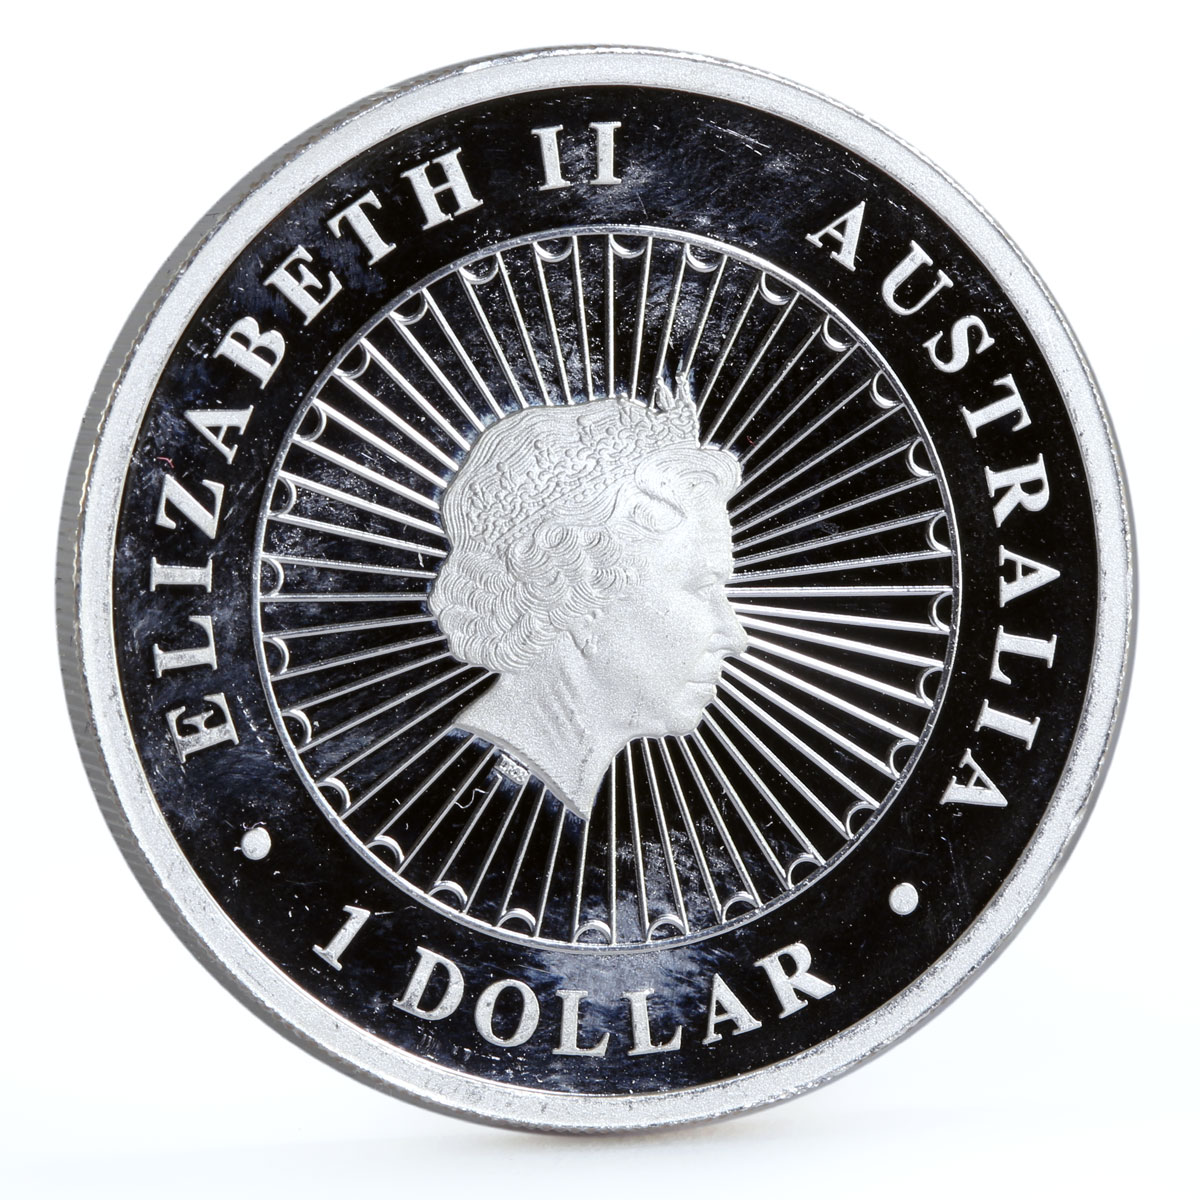 Australia 1 dollar Australian Opal series The Koala Fauna silver coin 2012